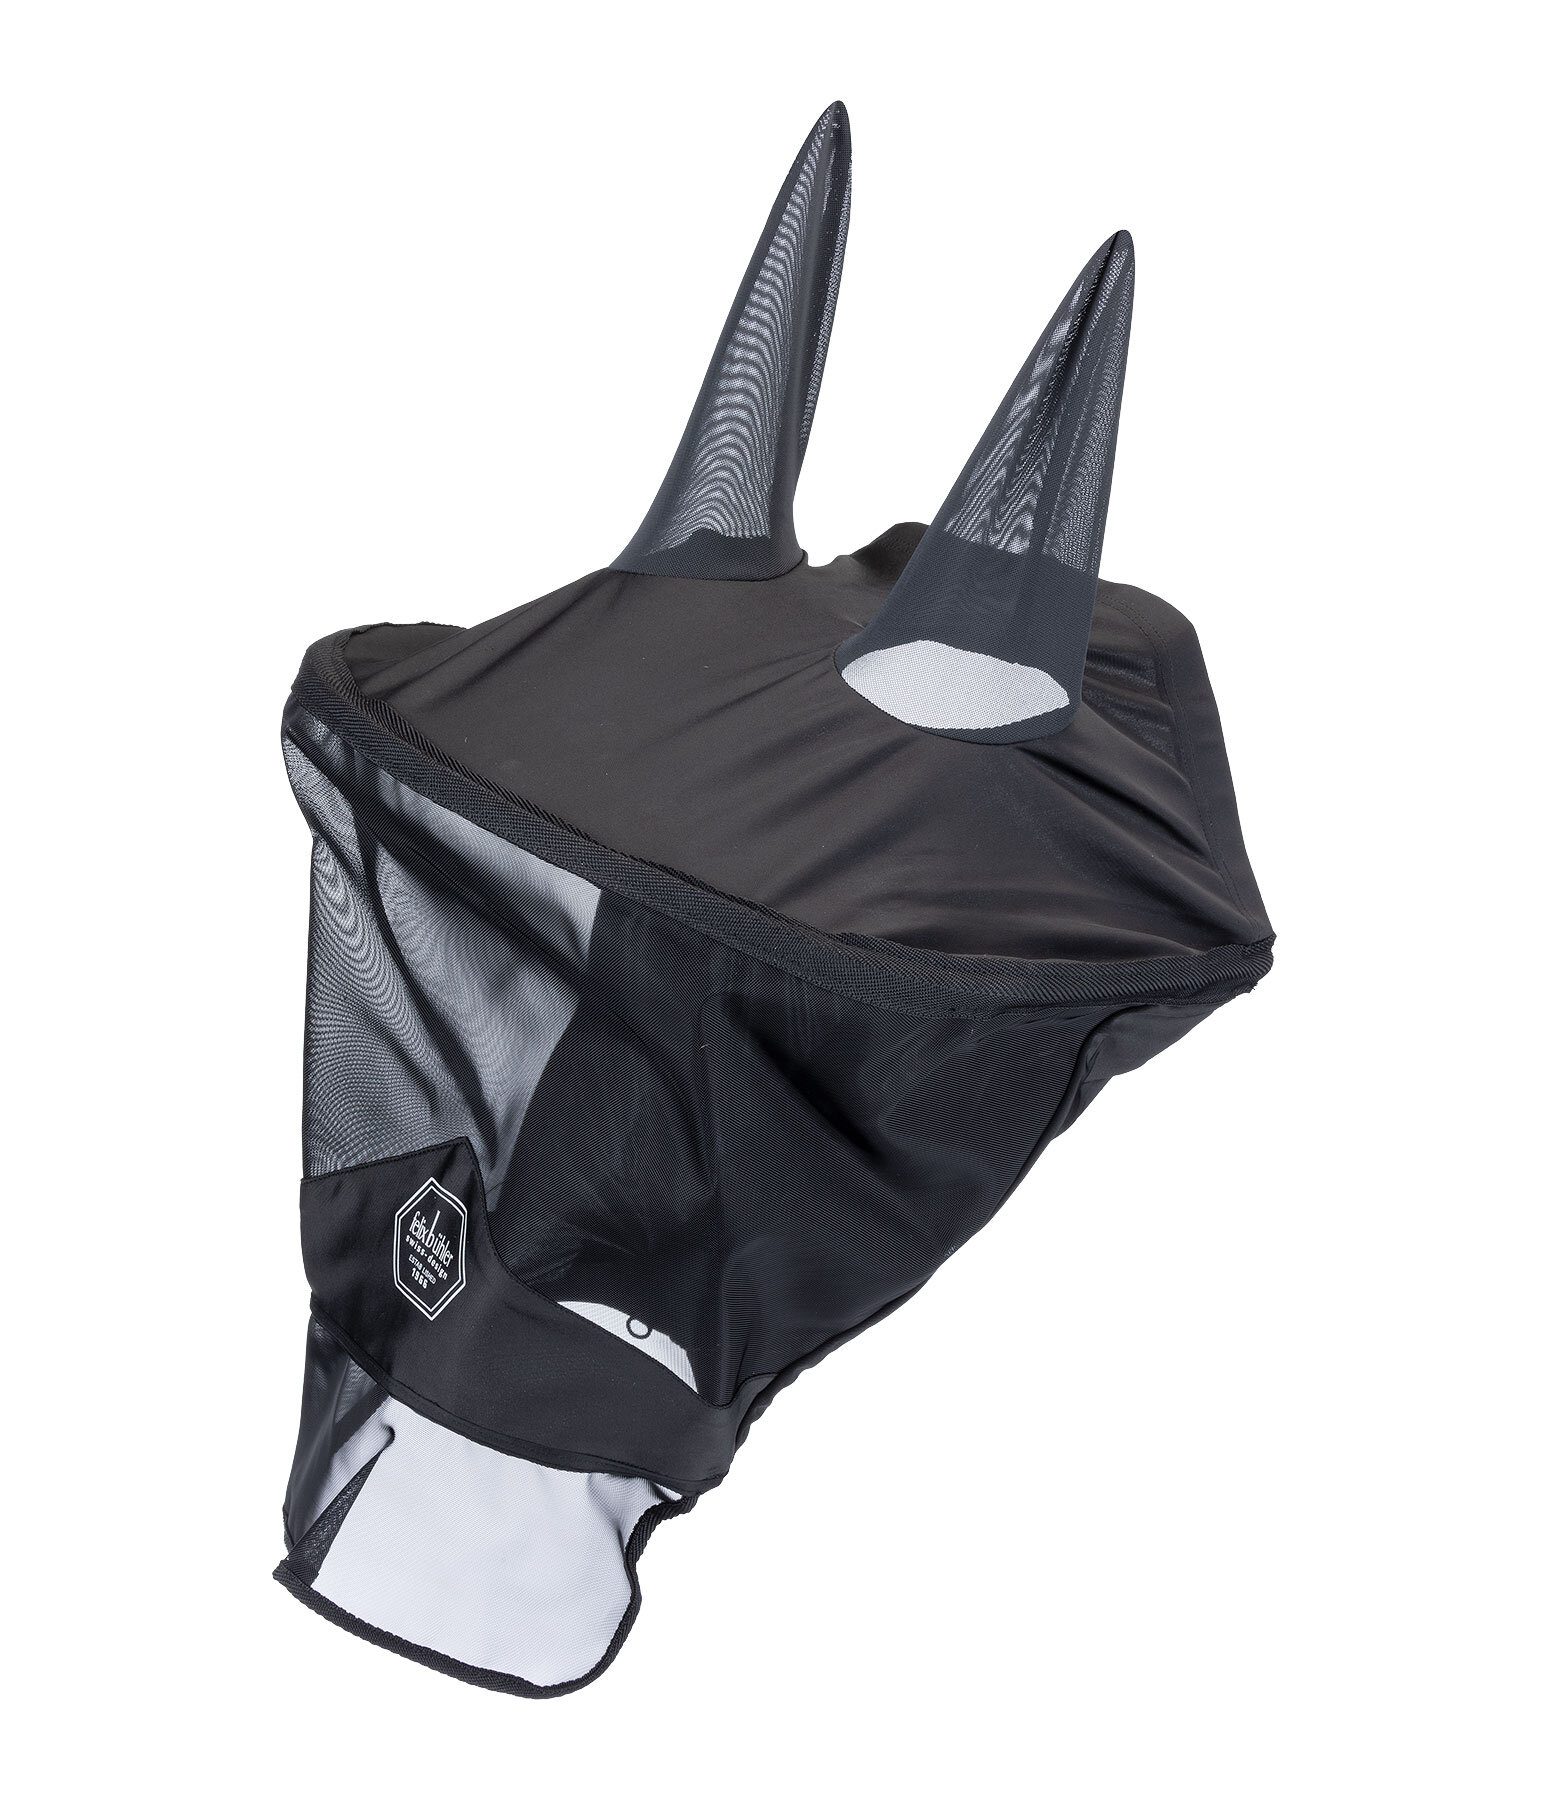 Stretch Comfort Pro vliegenmasker met rits en neusbeschermer